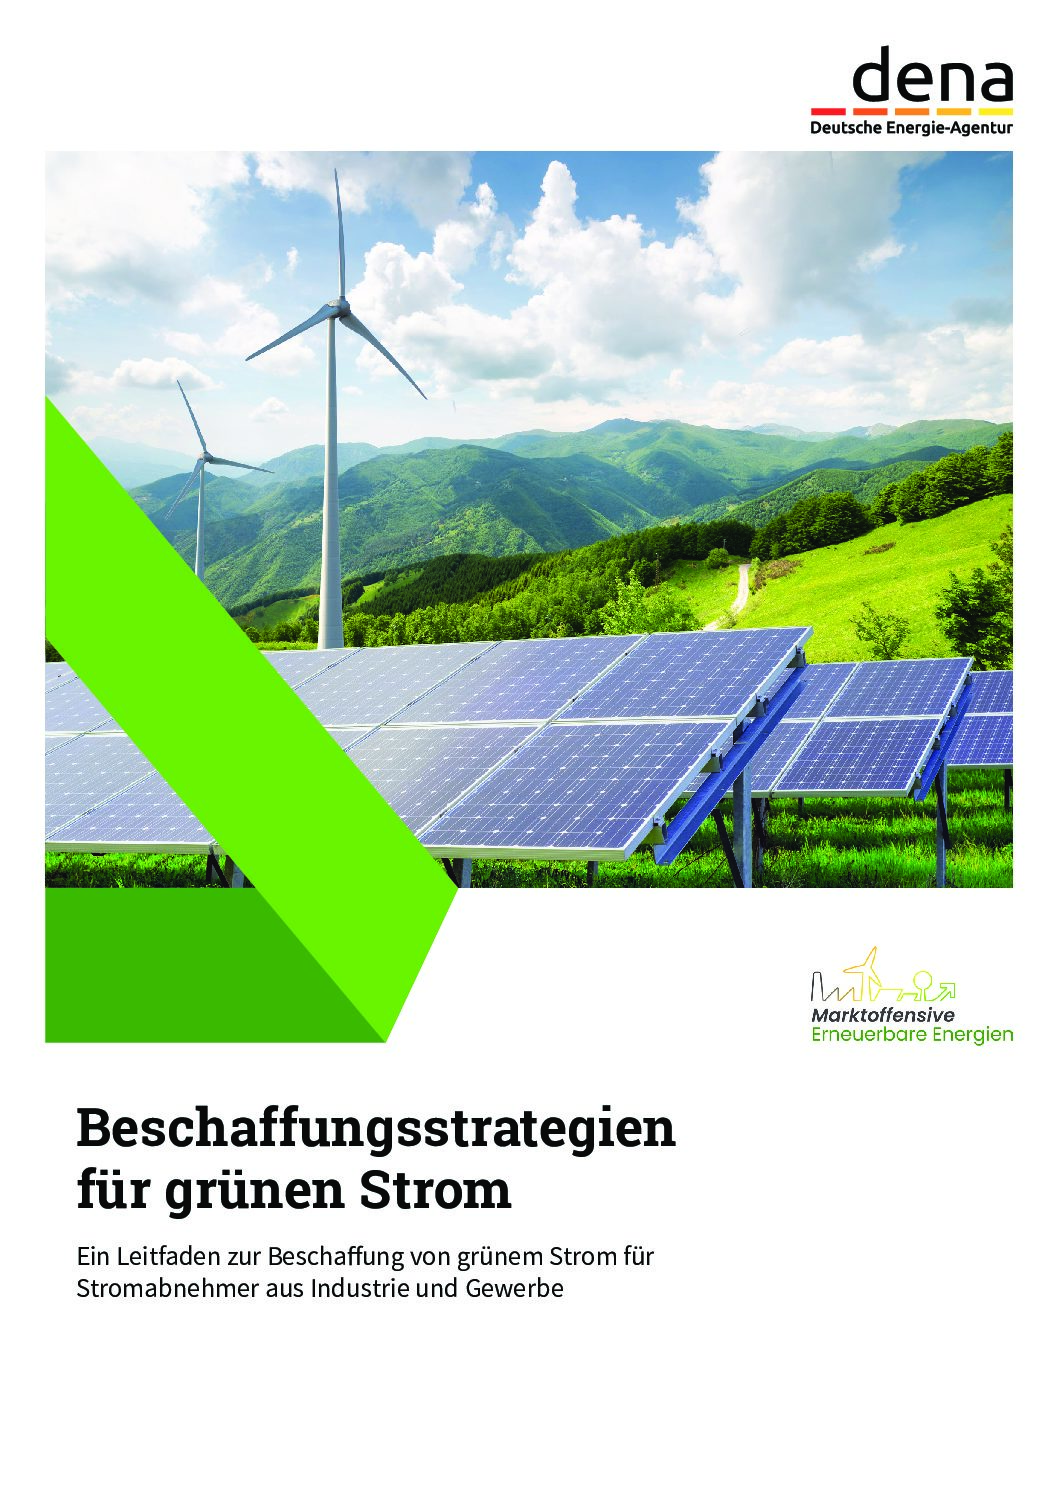 Beschaffungsstrategien für grünen Strom